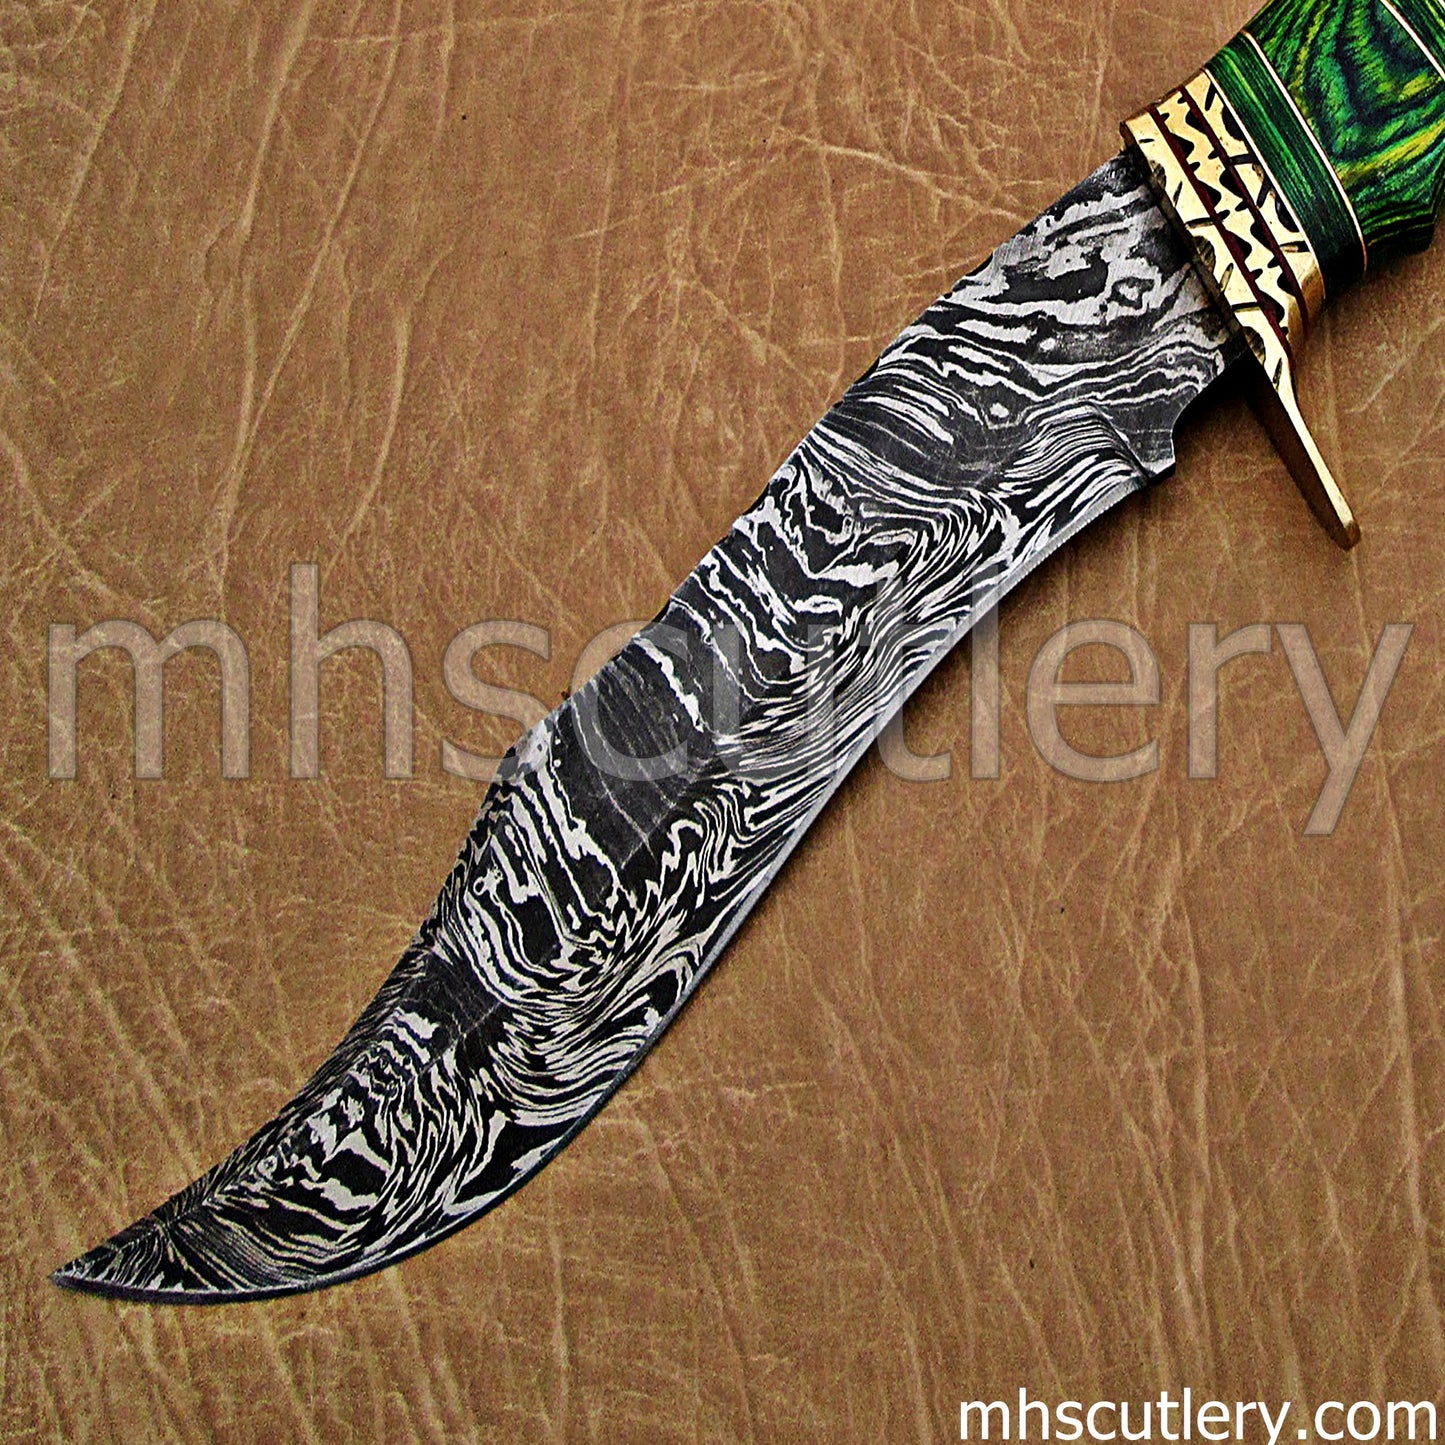 Custom Handmade Damascus Steel Tactical Hunting Knife | mhscutlery